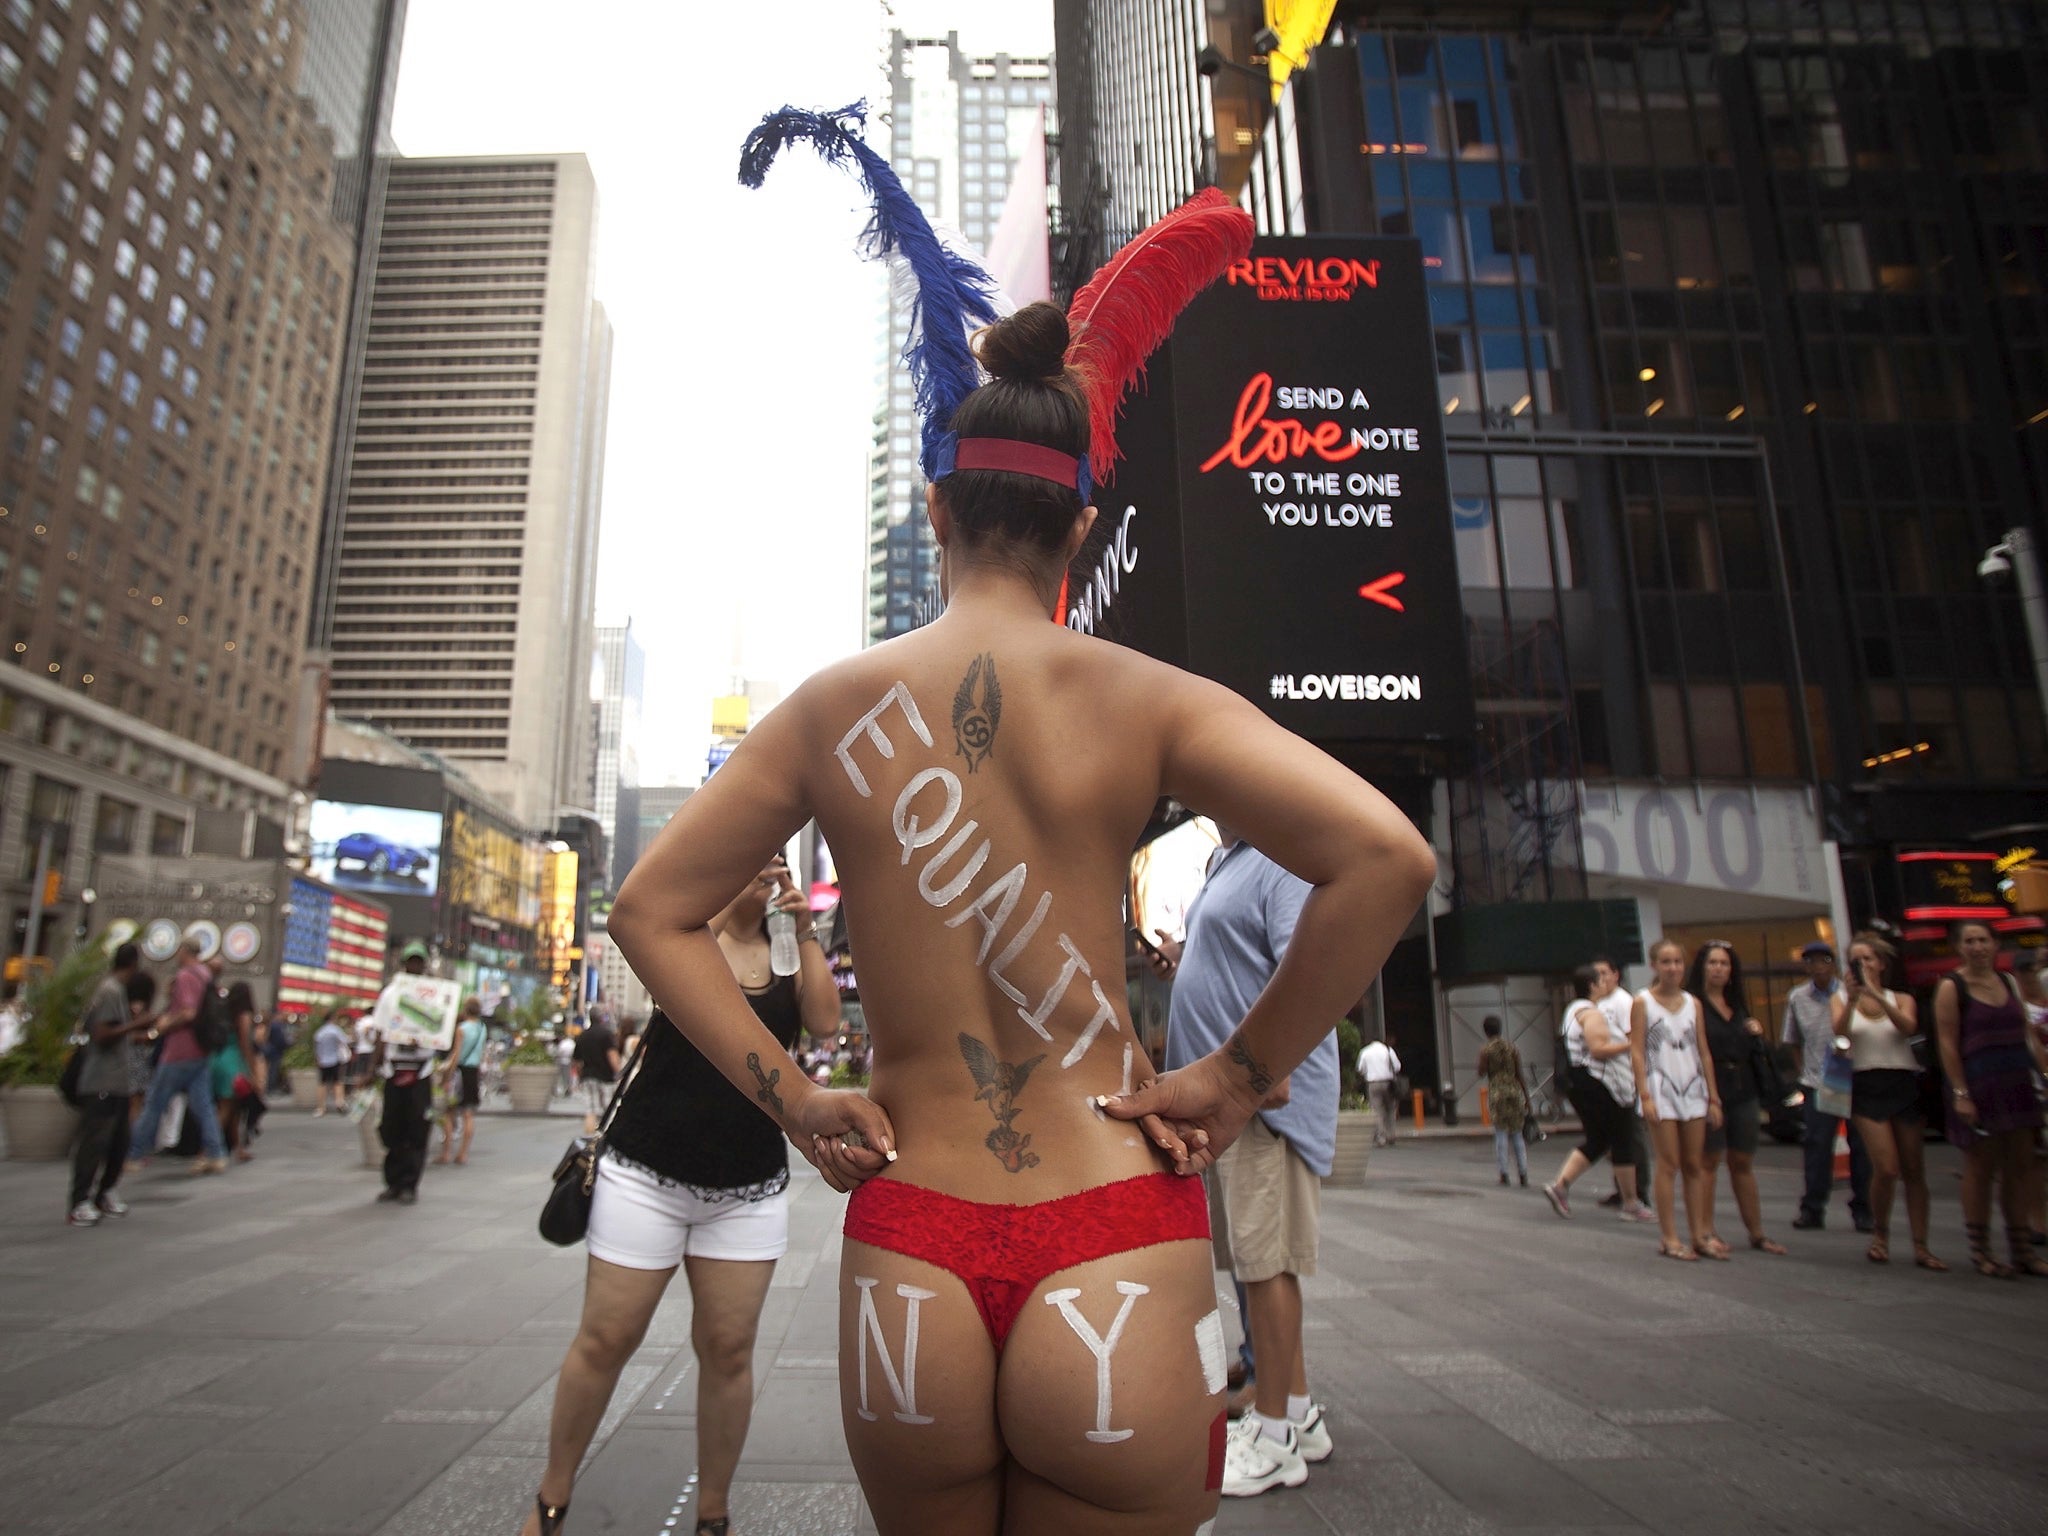 atif saeed add photo naked new york tumblr